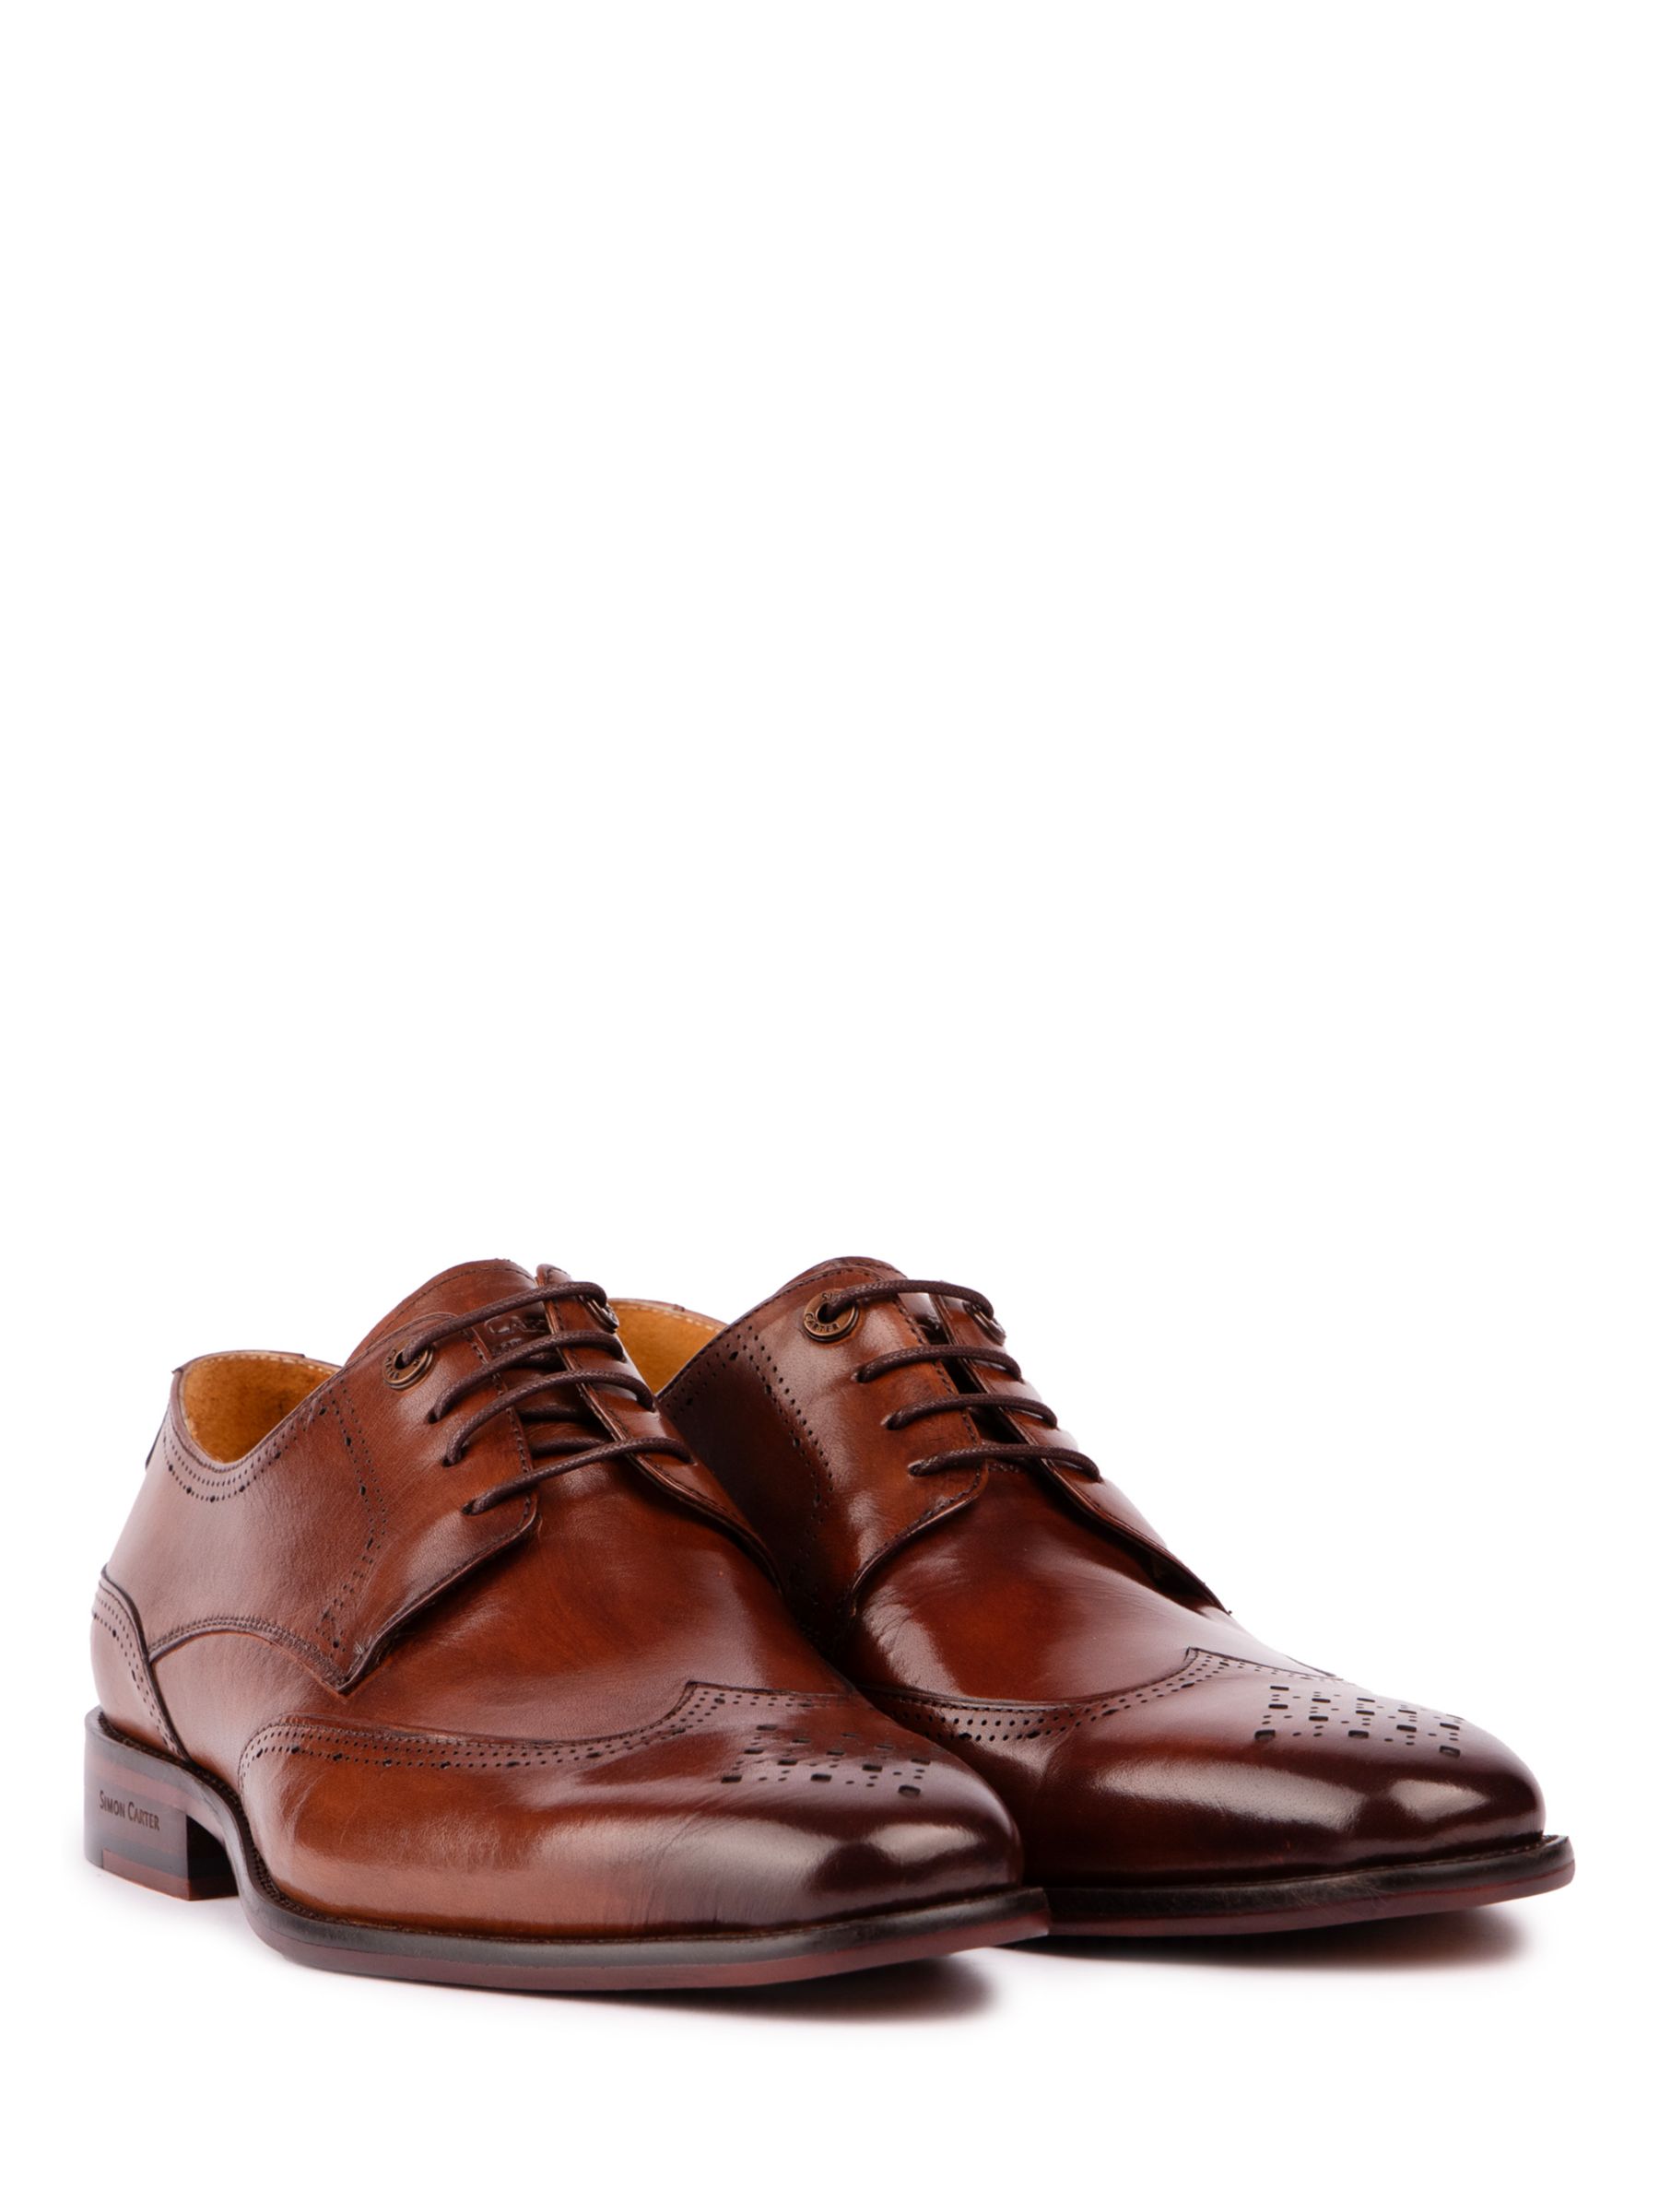 Simon Carter Burrow Leather Brogue Shoes, Tan, 7